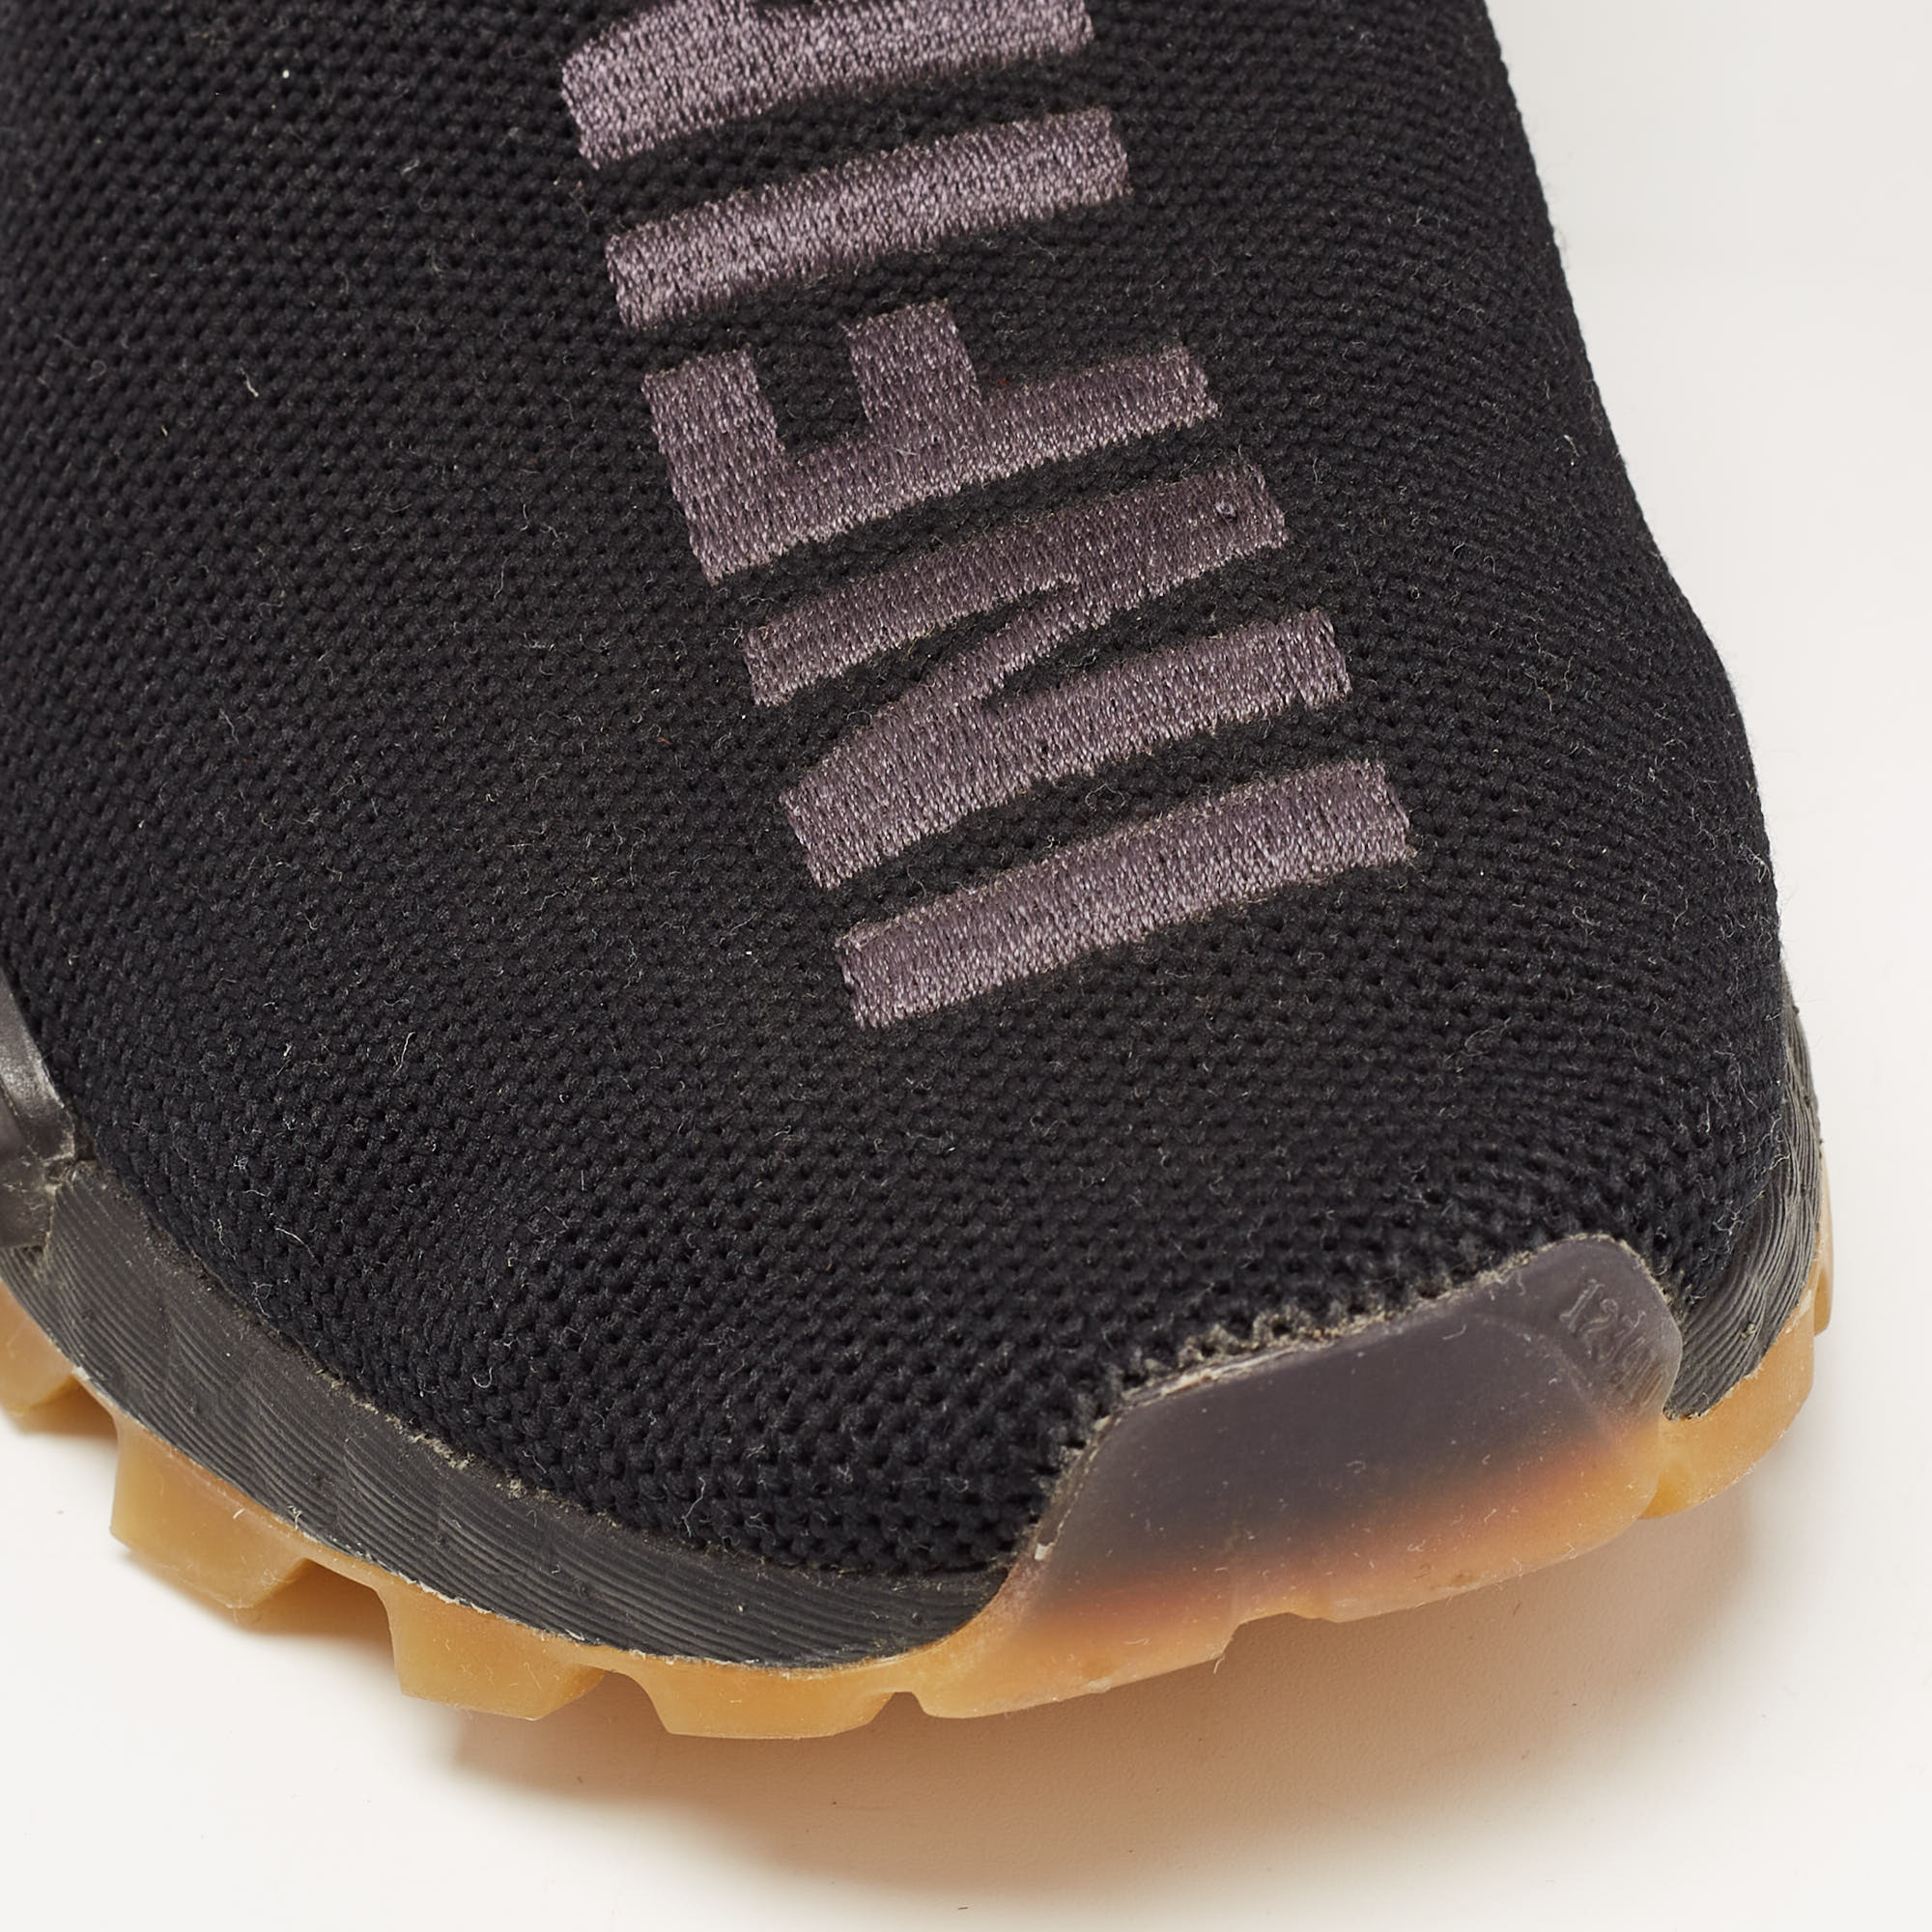 Adidas X Pharell Williams NMD Black Fabric Hu Trail Holi Low Top Sneakers Size 38.5